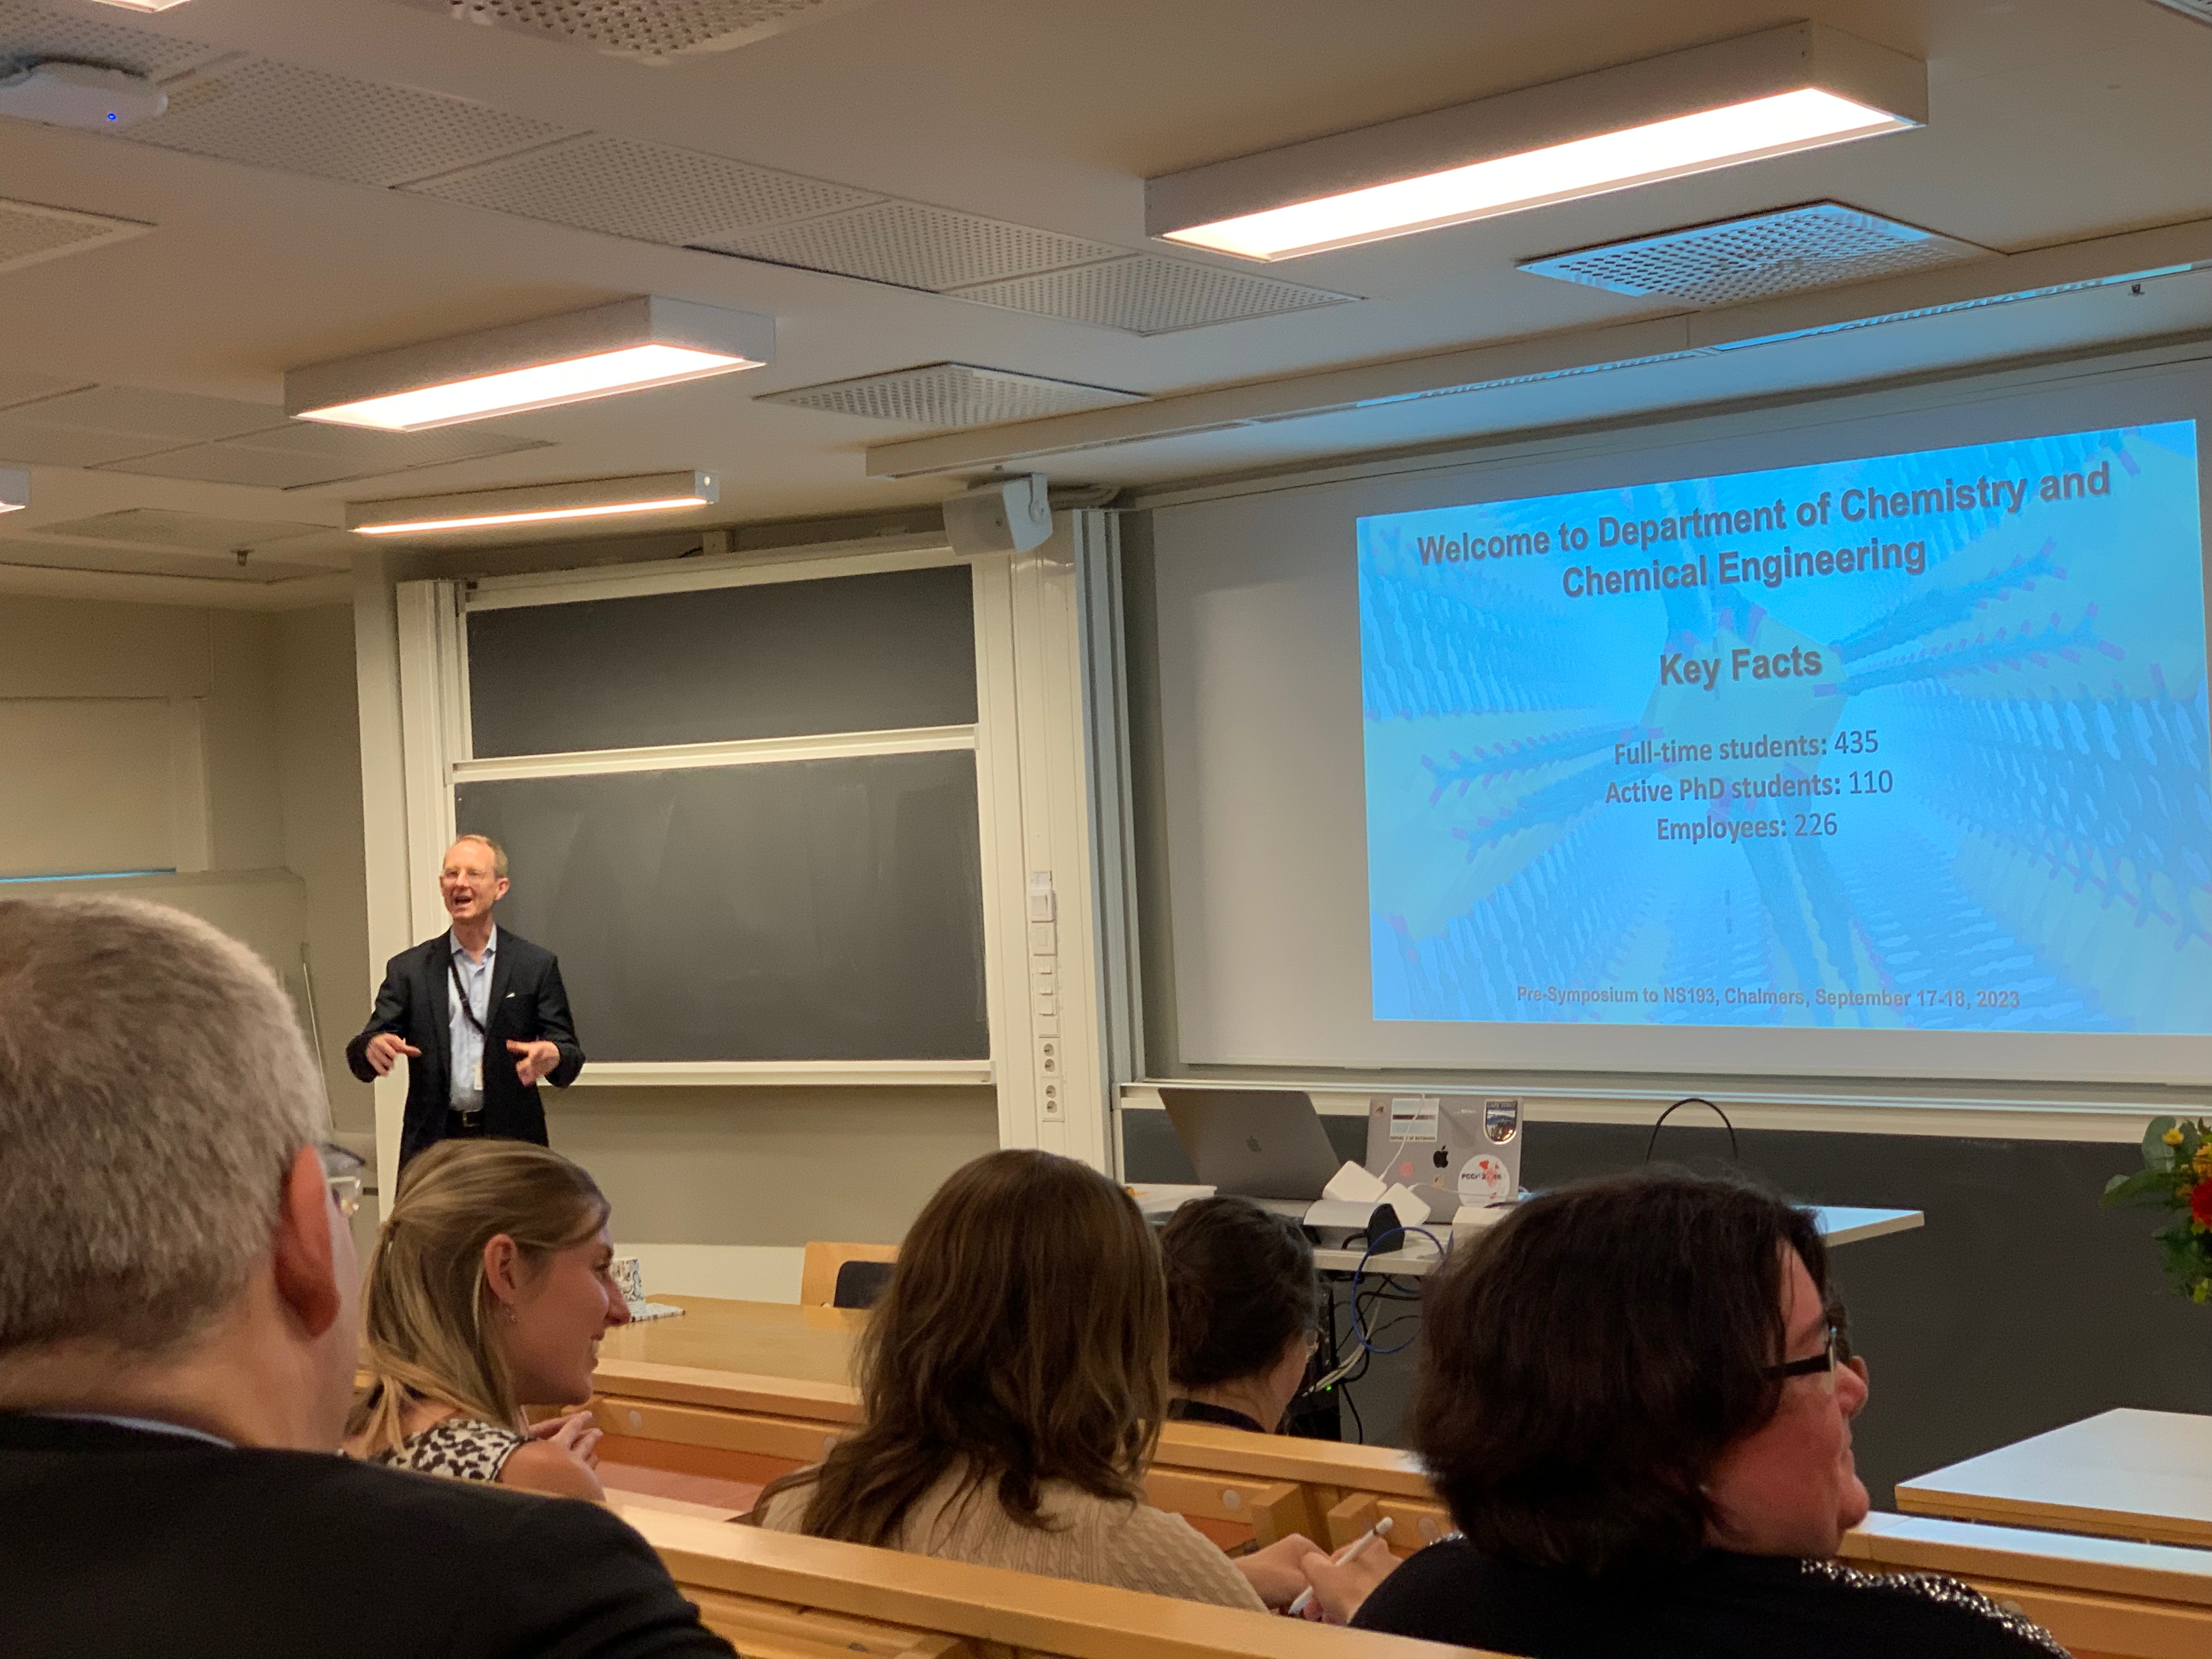 Prof. Lars openning the presymposium